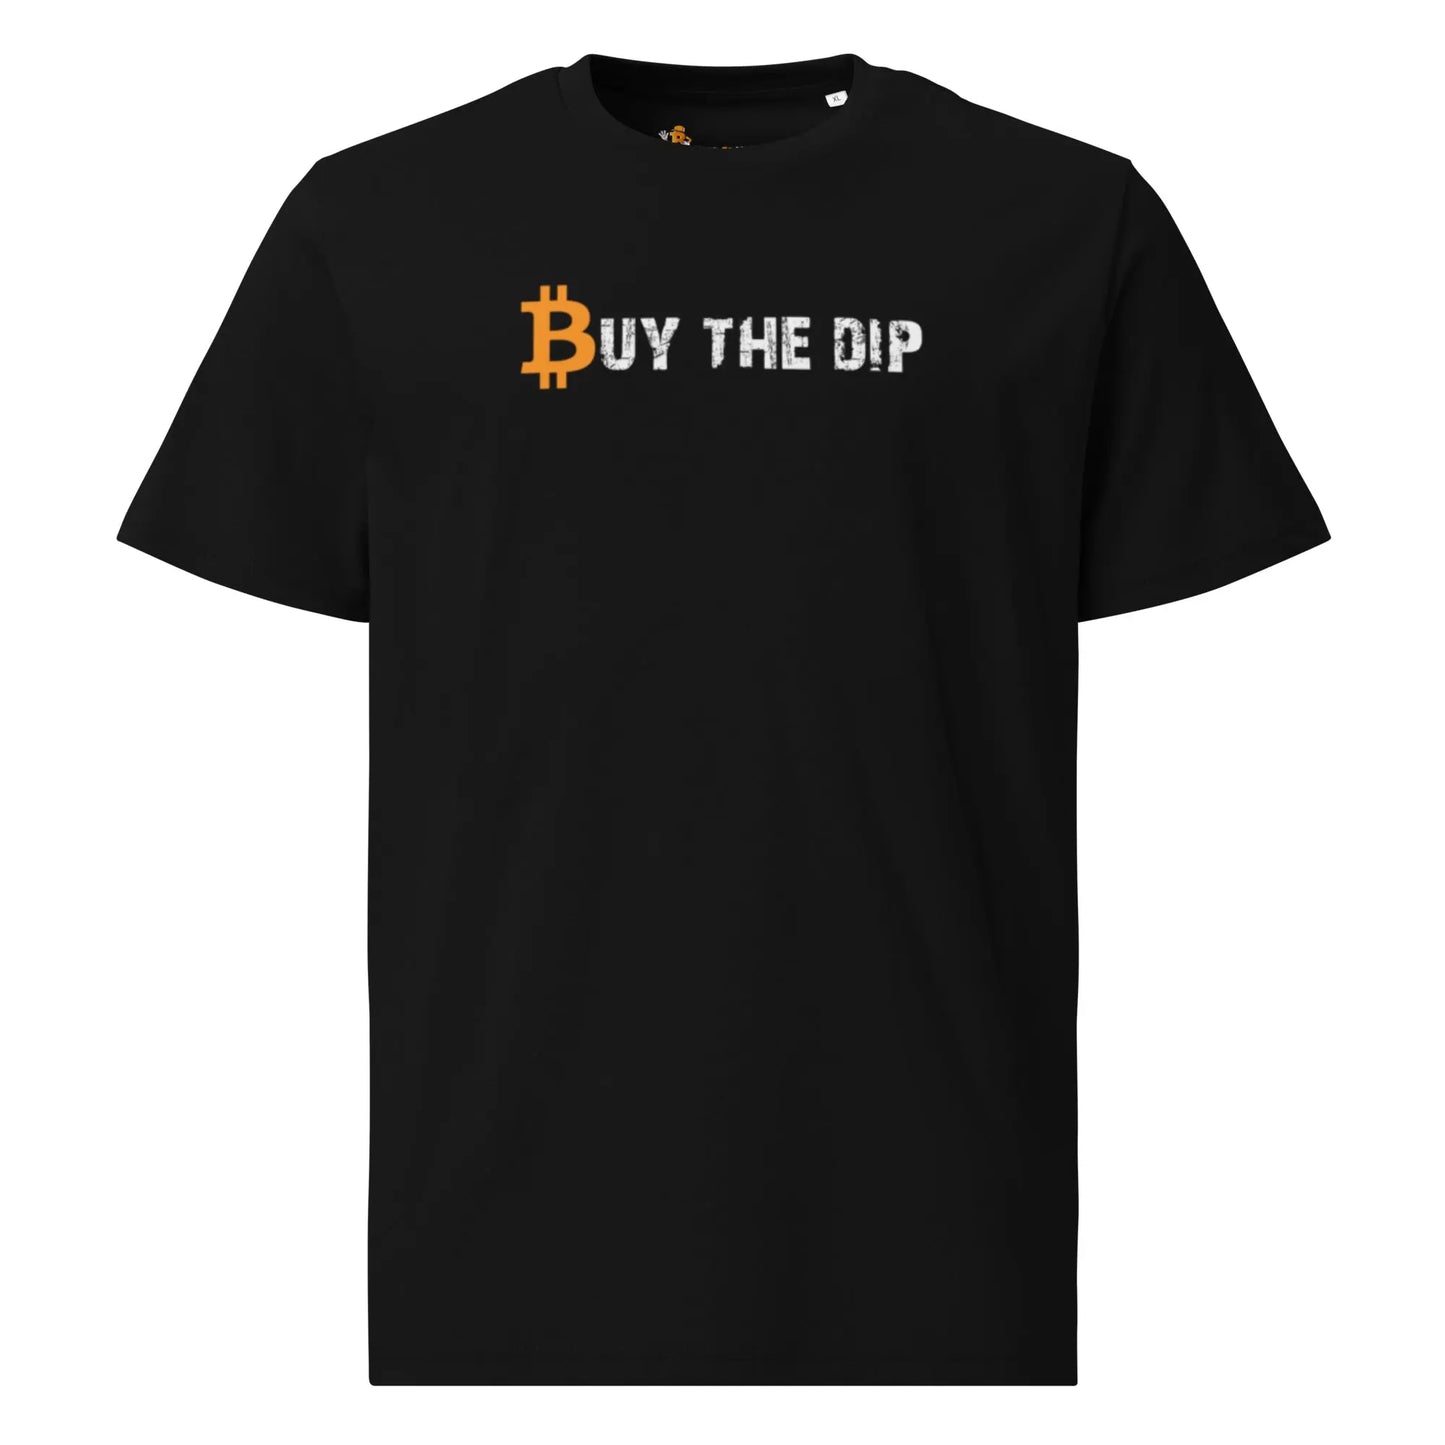 Buy The Dip - Premium Unisex Organic Cotton Bitcoin T-shirt Black Color